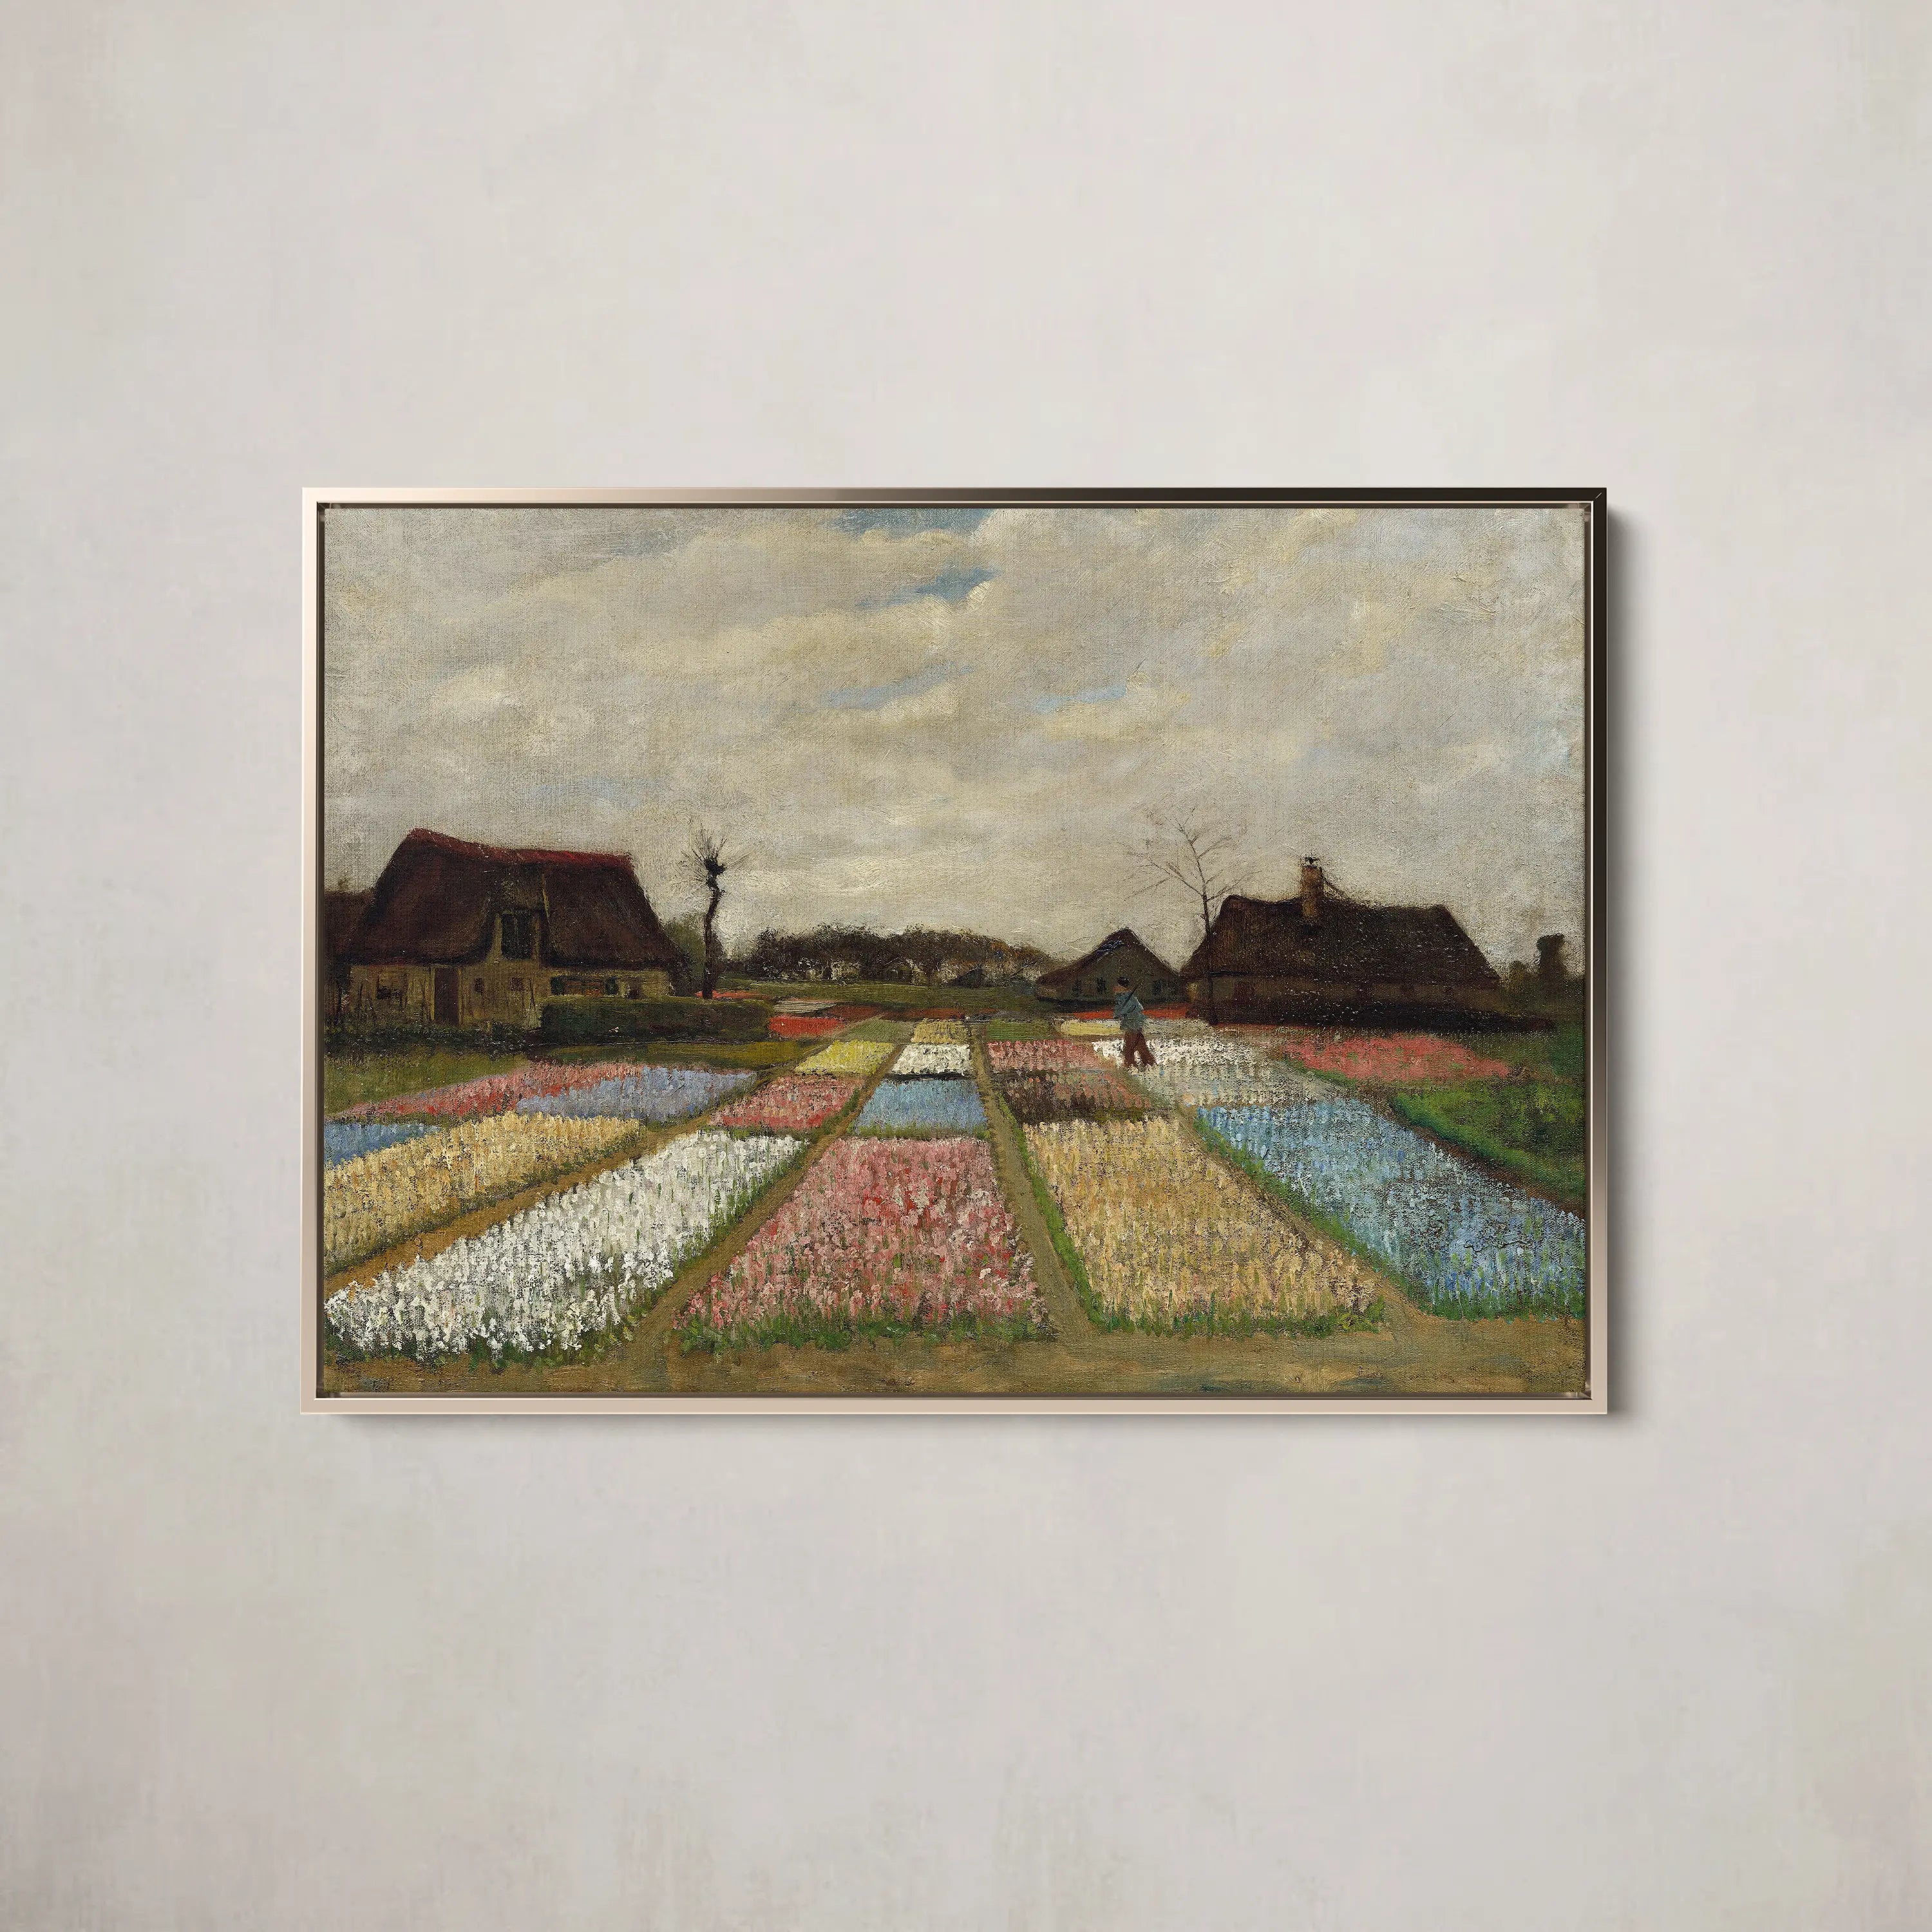 Flower Beds in Holland (c. 1883) Vincent van Gogh